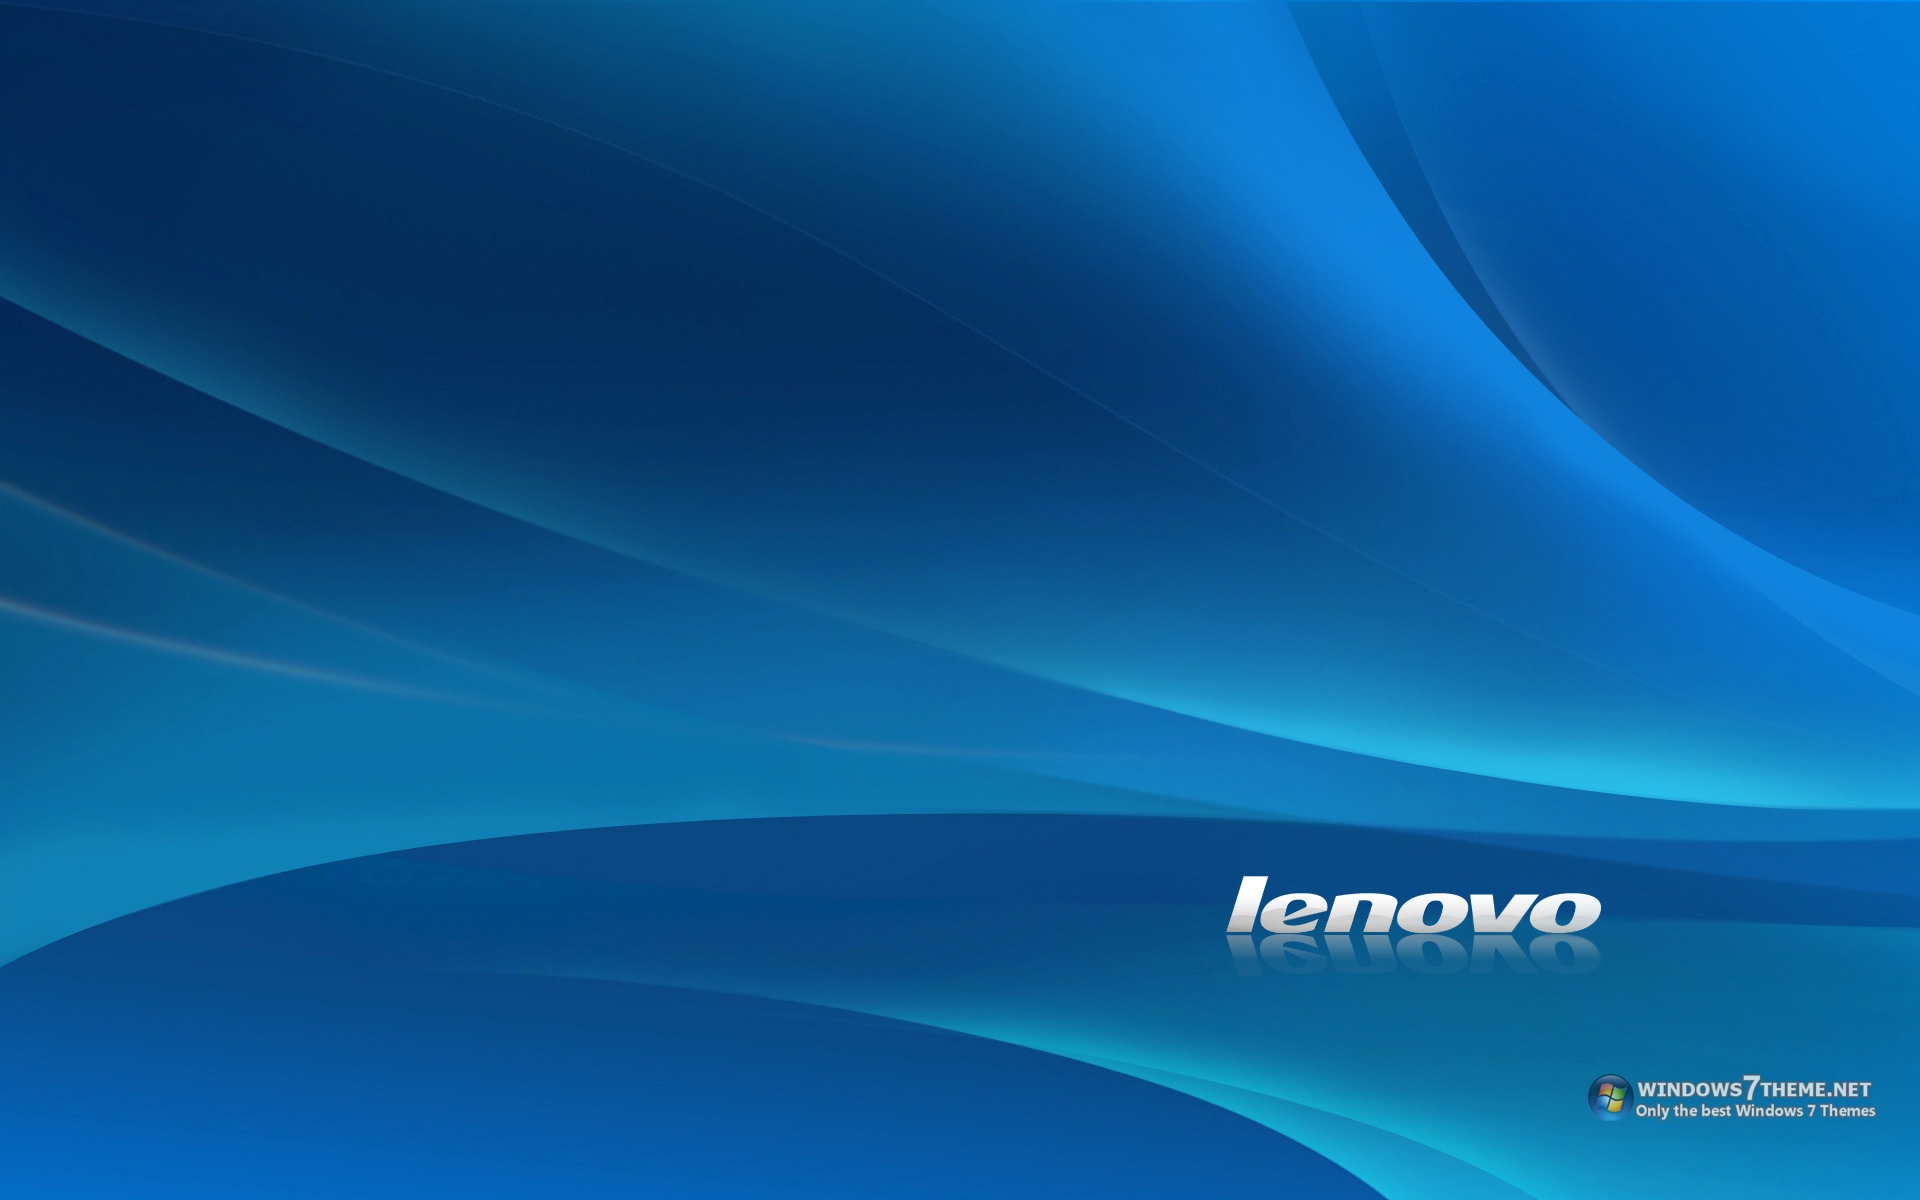 Lenovo Wallpaper Windows Submited Image